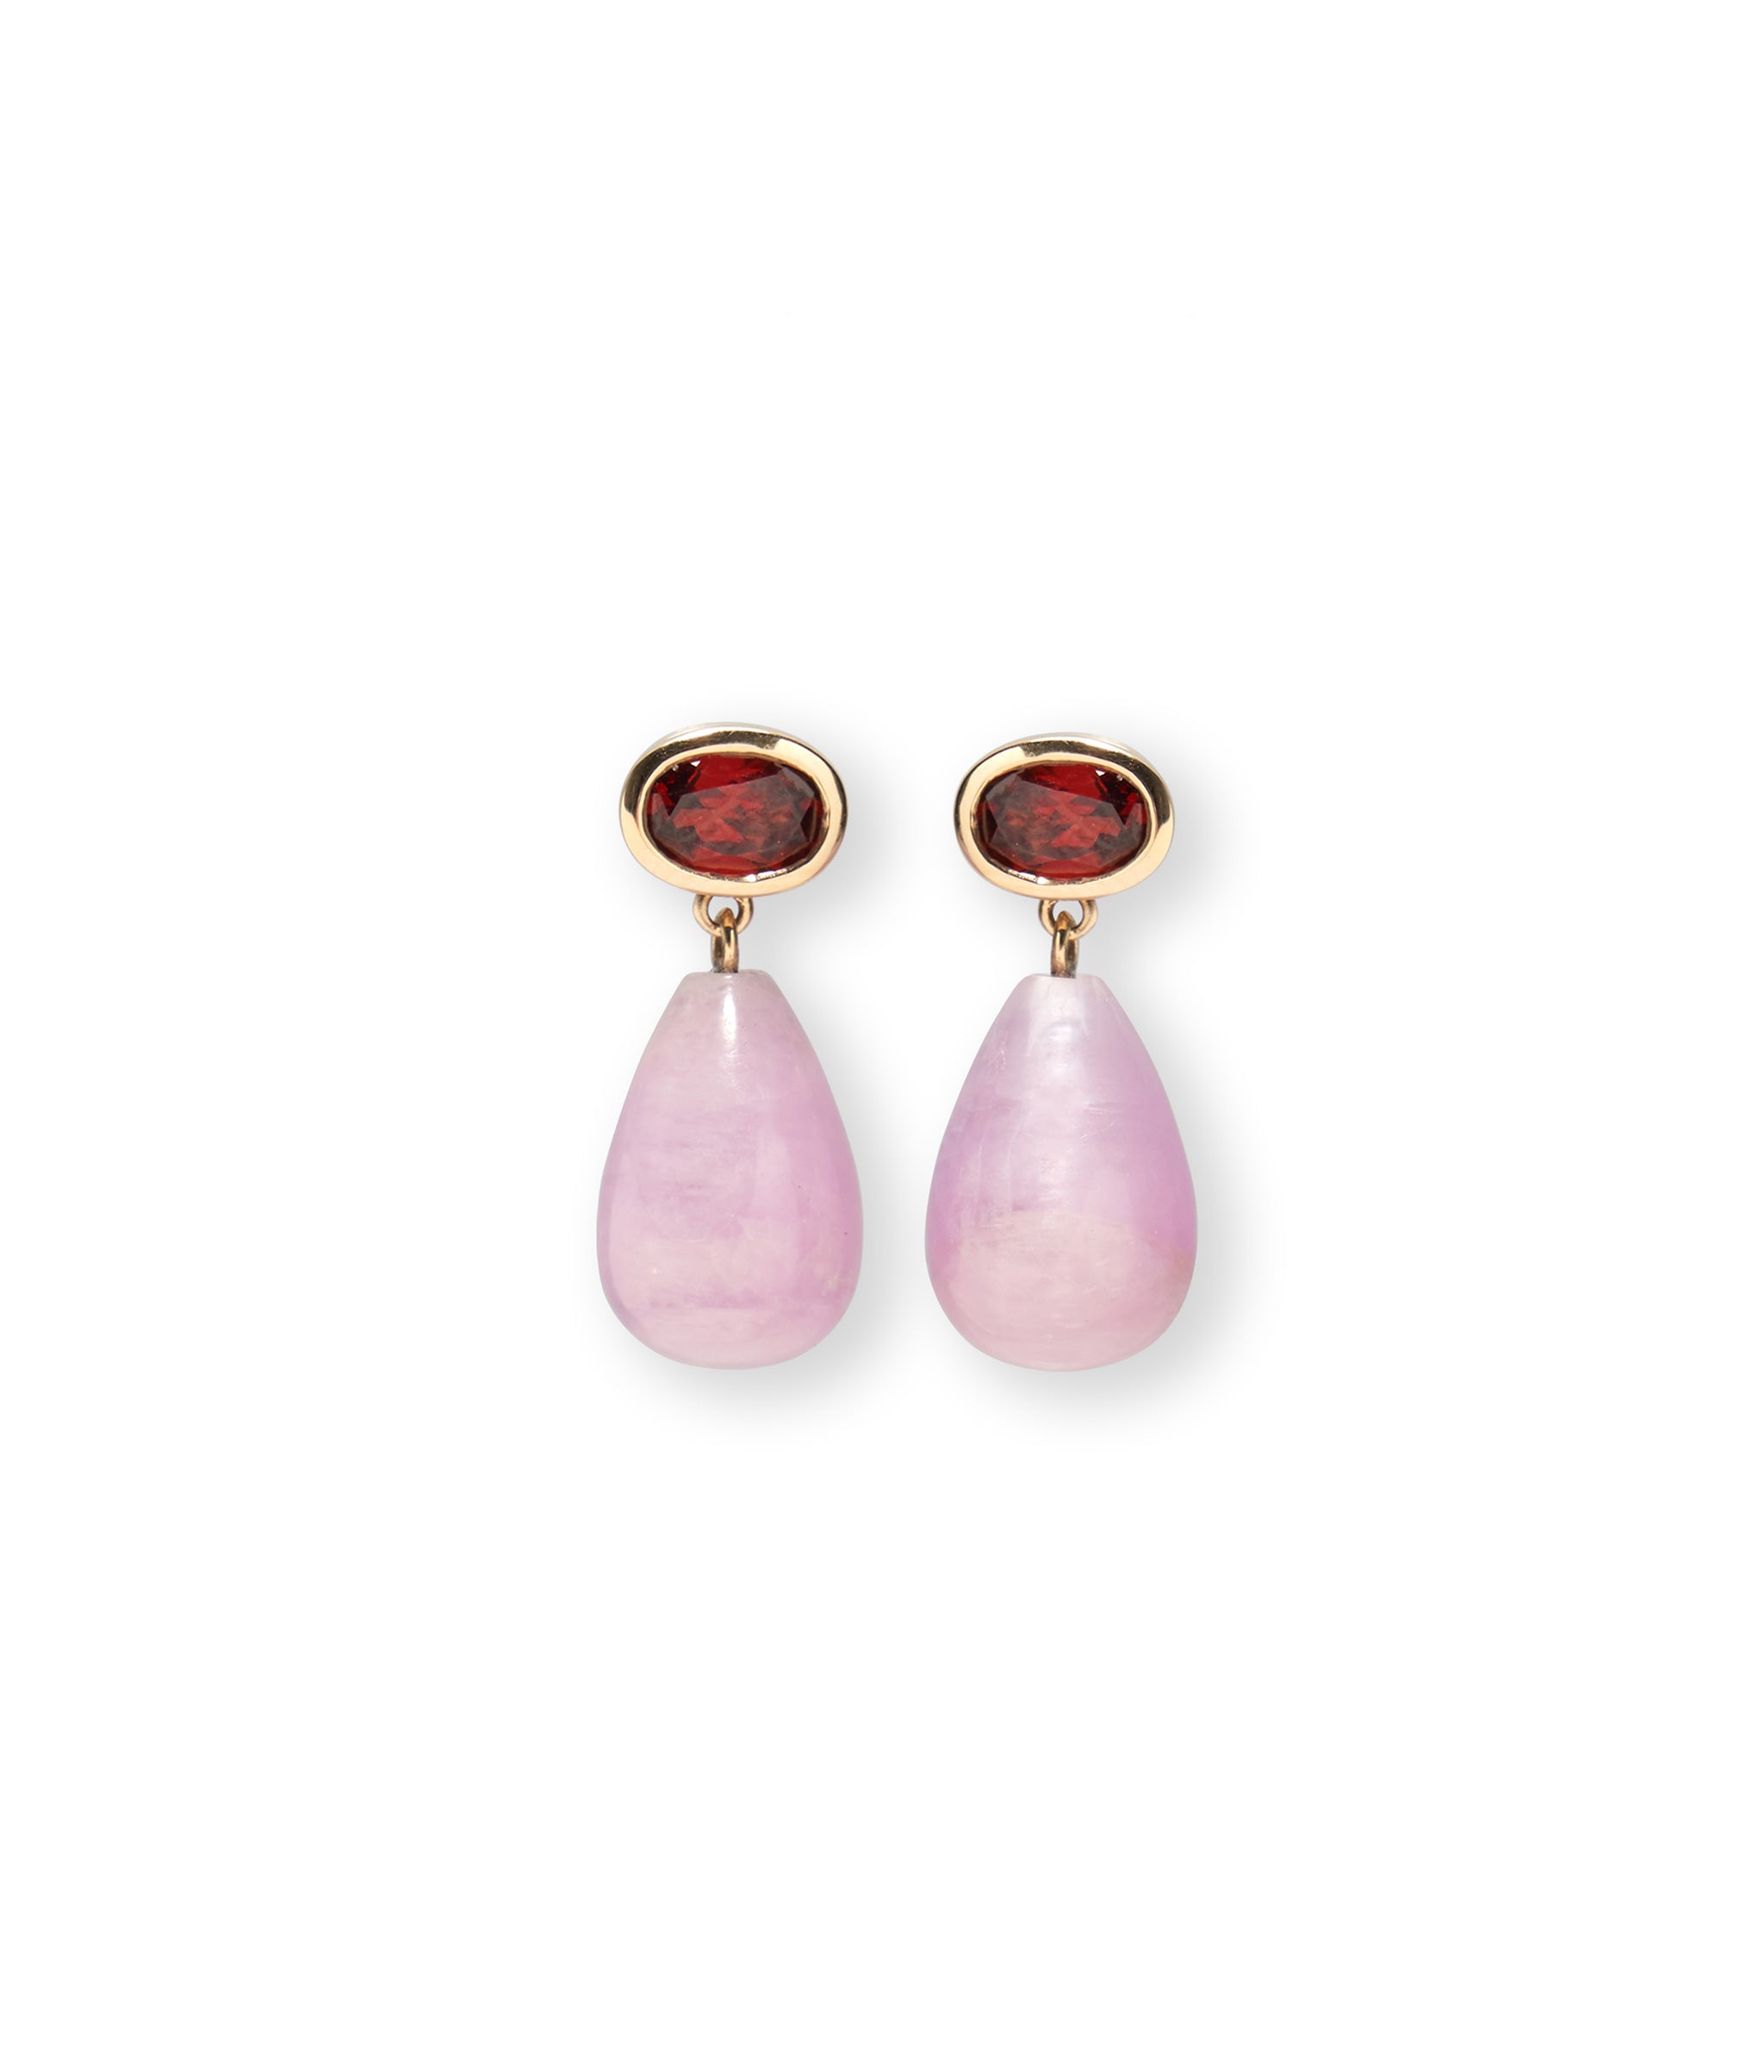 14k Gold Drop Earrings in Garnet & Kunzite. Faceted garnet tops and hanging purple-pink kunzite drops.